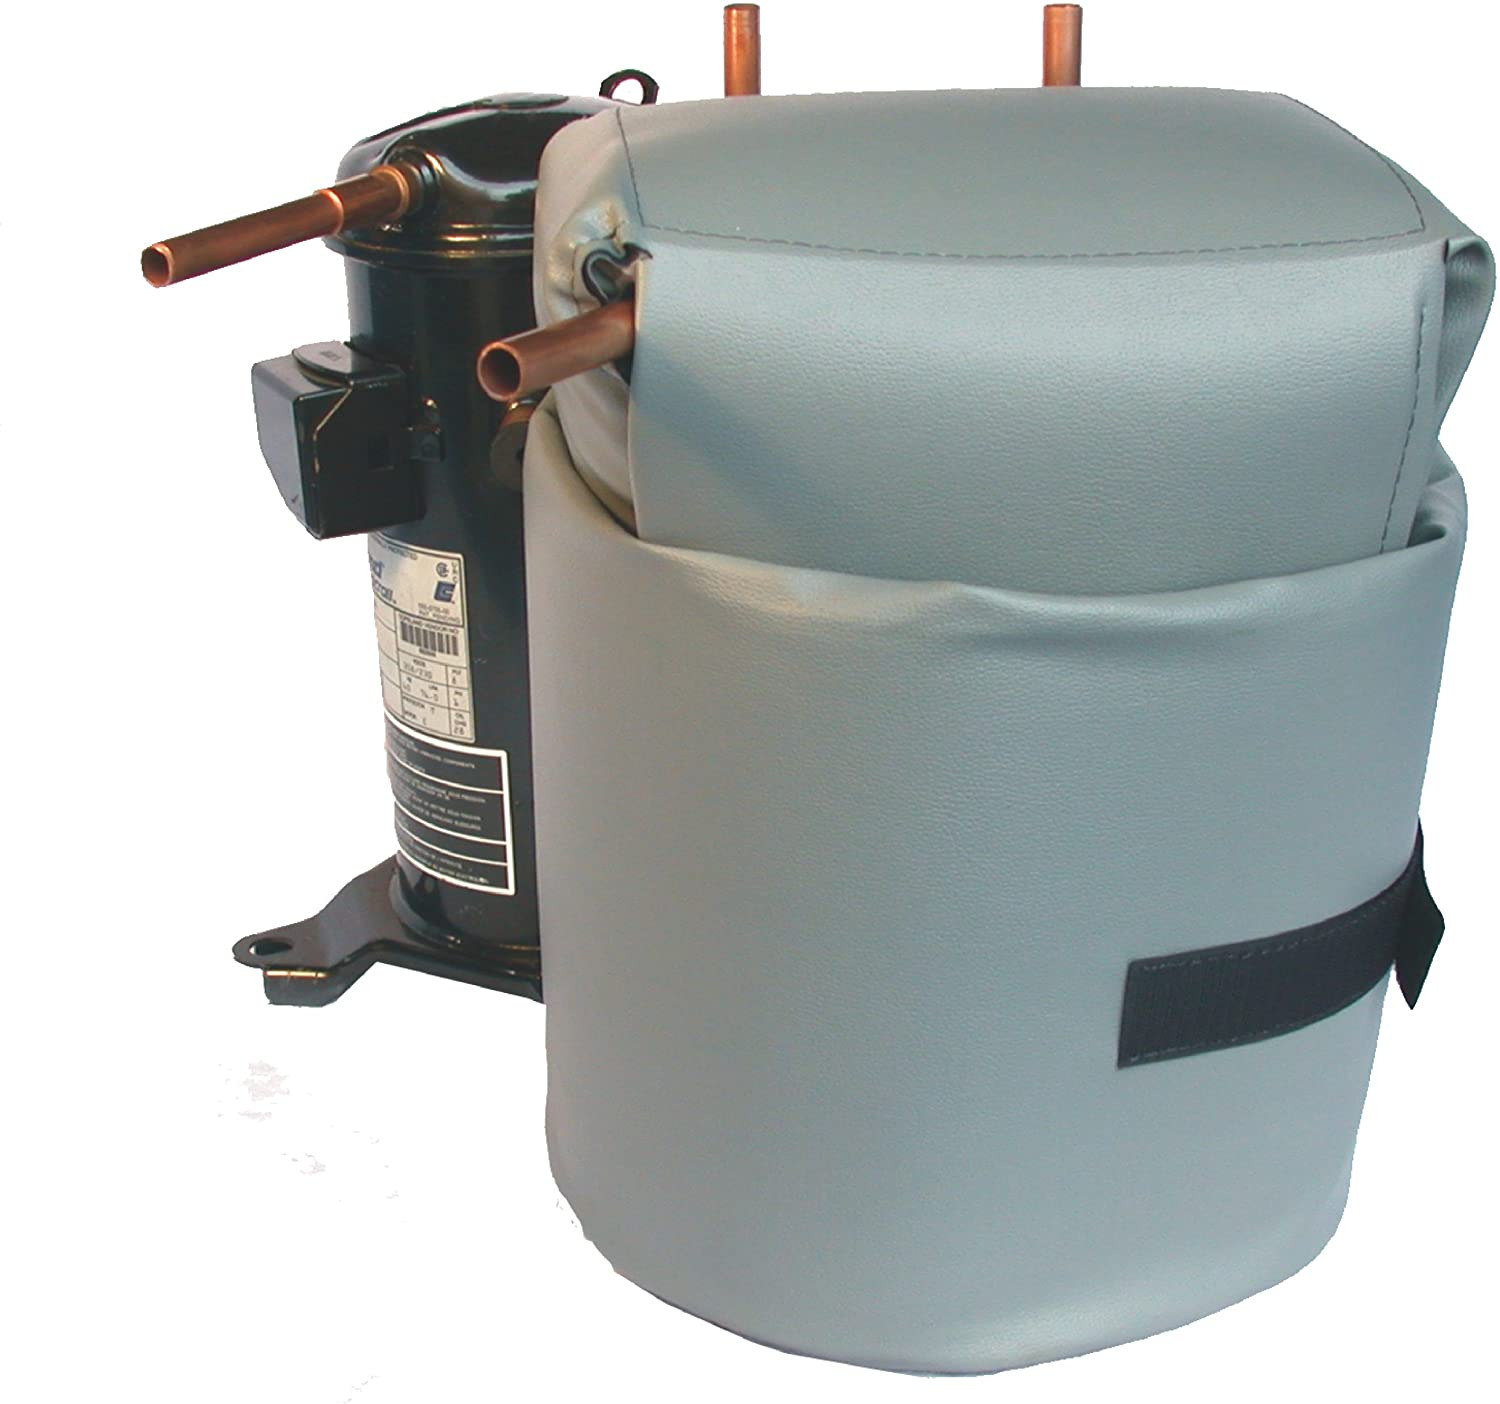 Brinmar SBUHD Universal-Fit Air Conditioner Compressor Sound Blanket Wrap (#0421